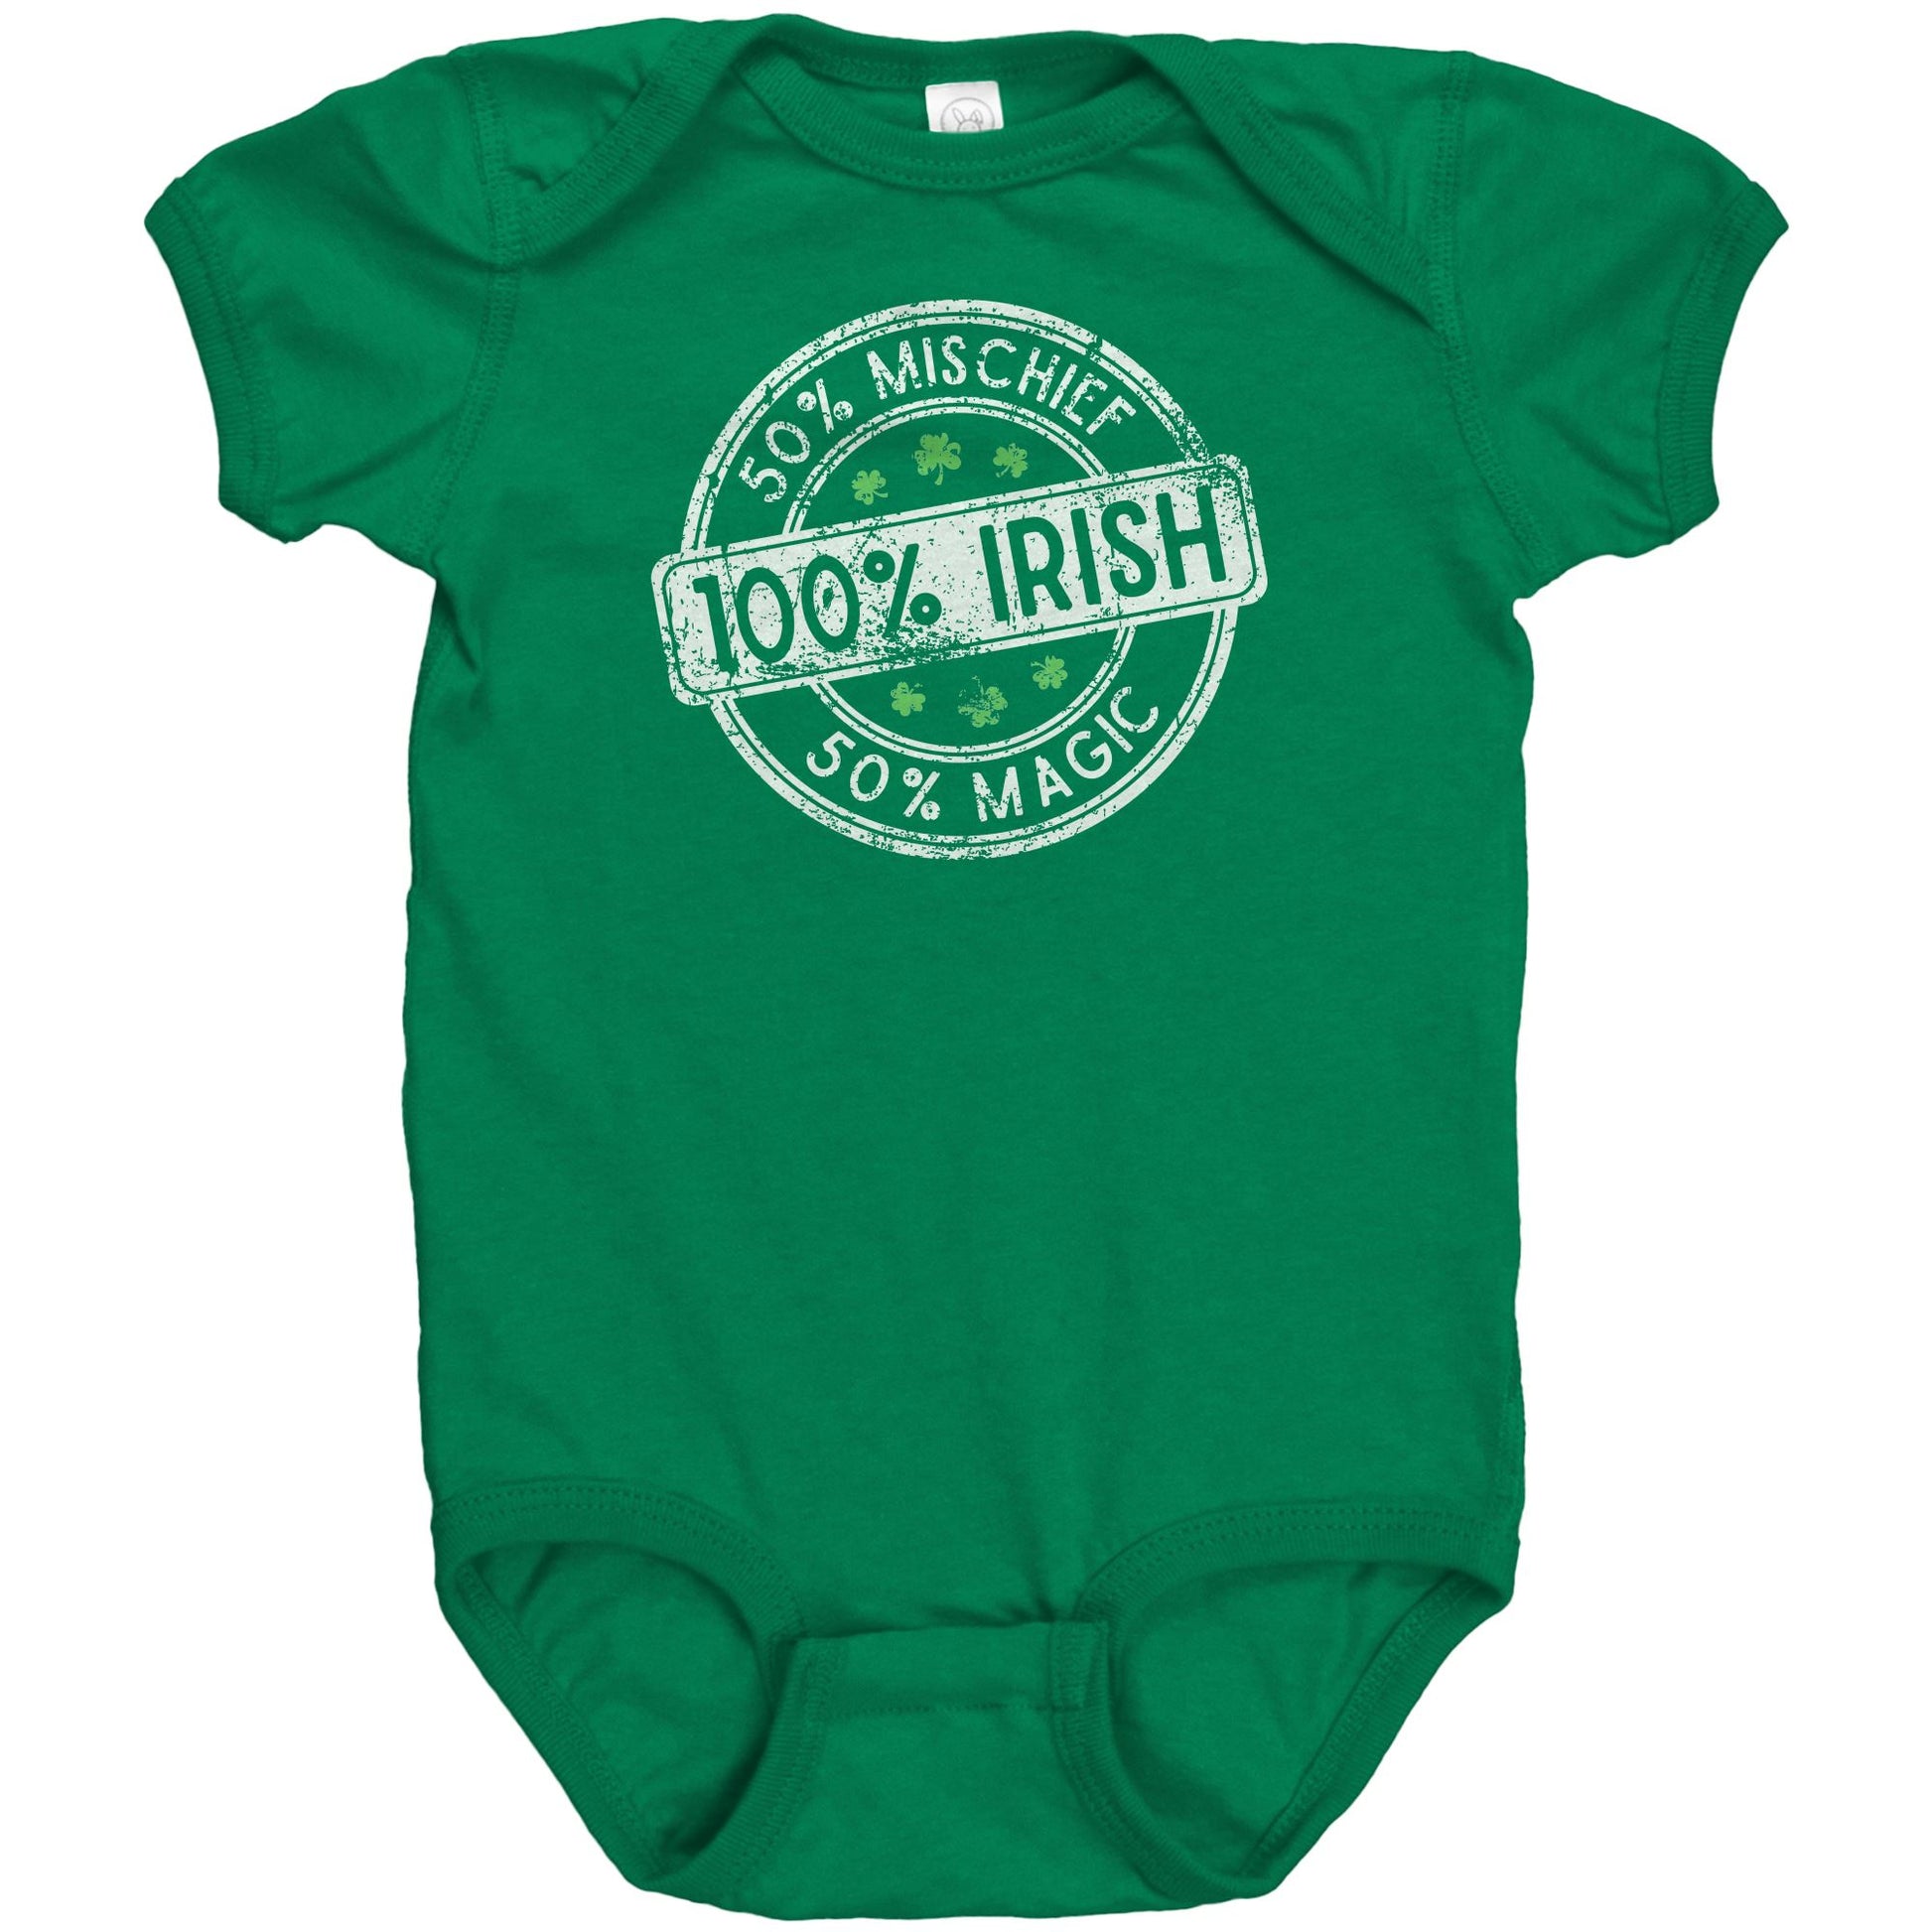 50% Mischief, 50% Magic, 100% IRISH • Infant and Kids T-shirts T-shirt teelaunch Onesie Kelly Green NB